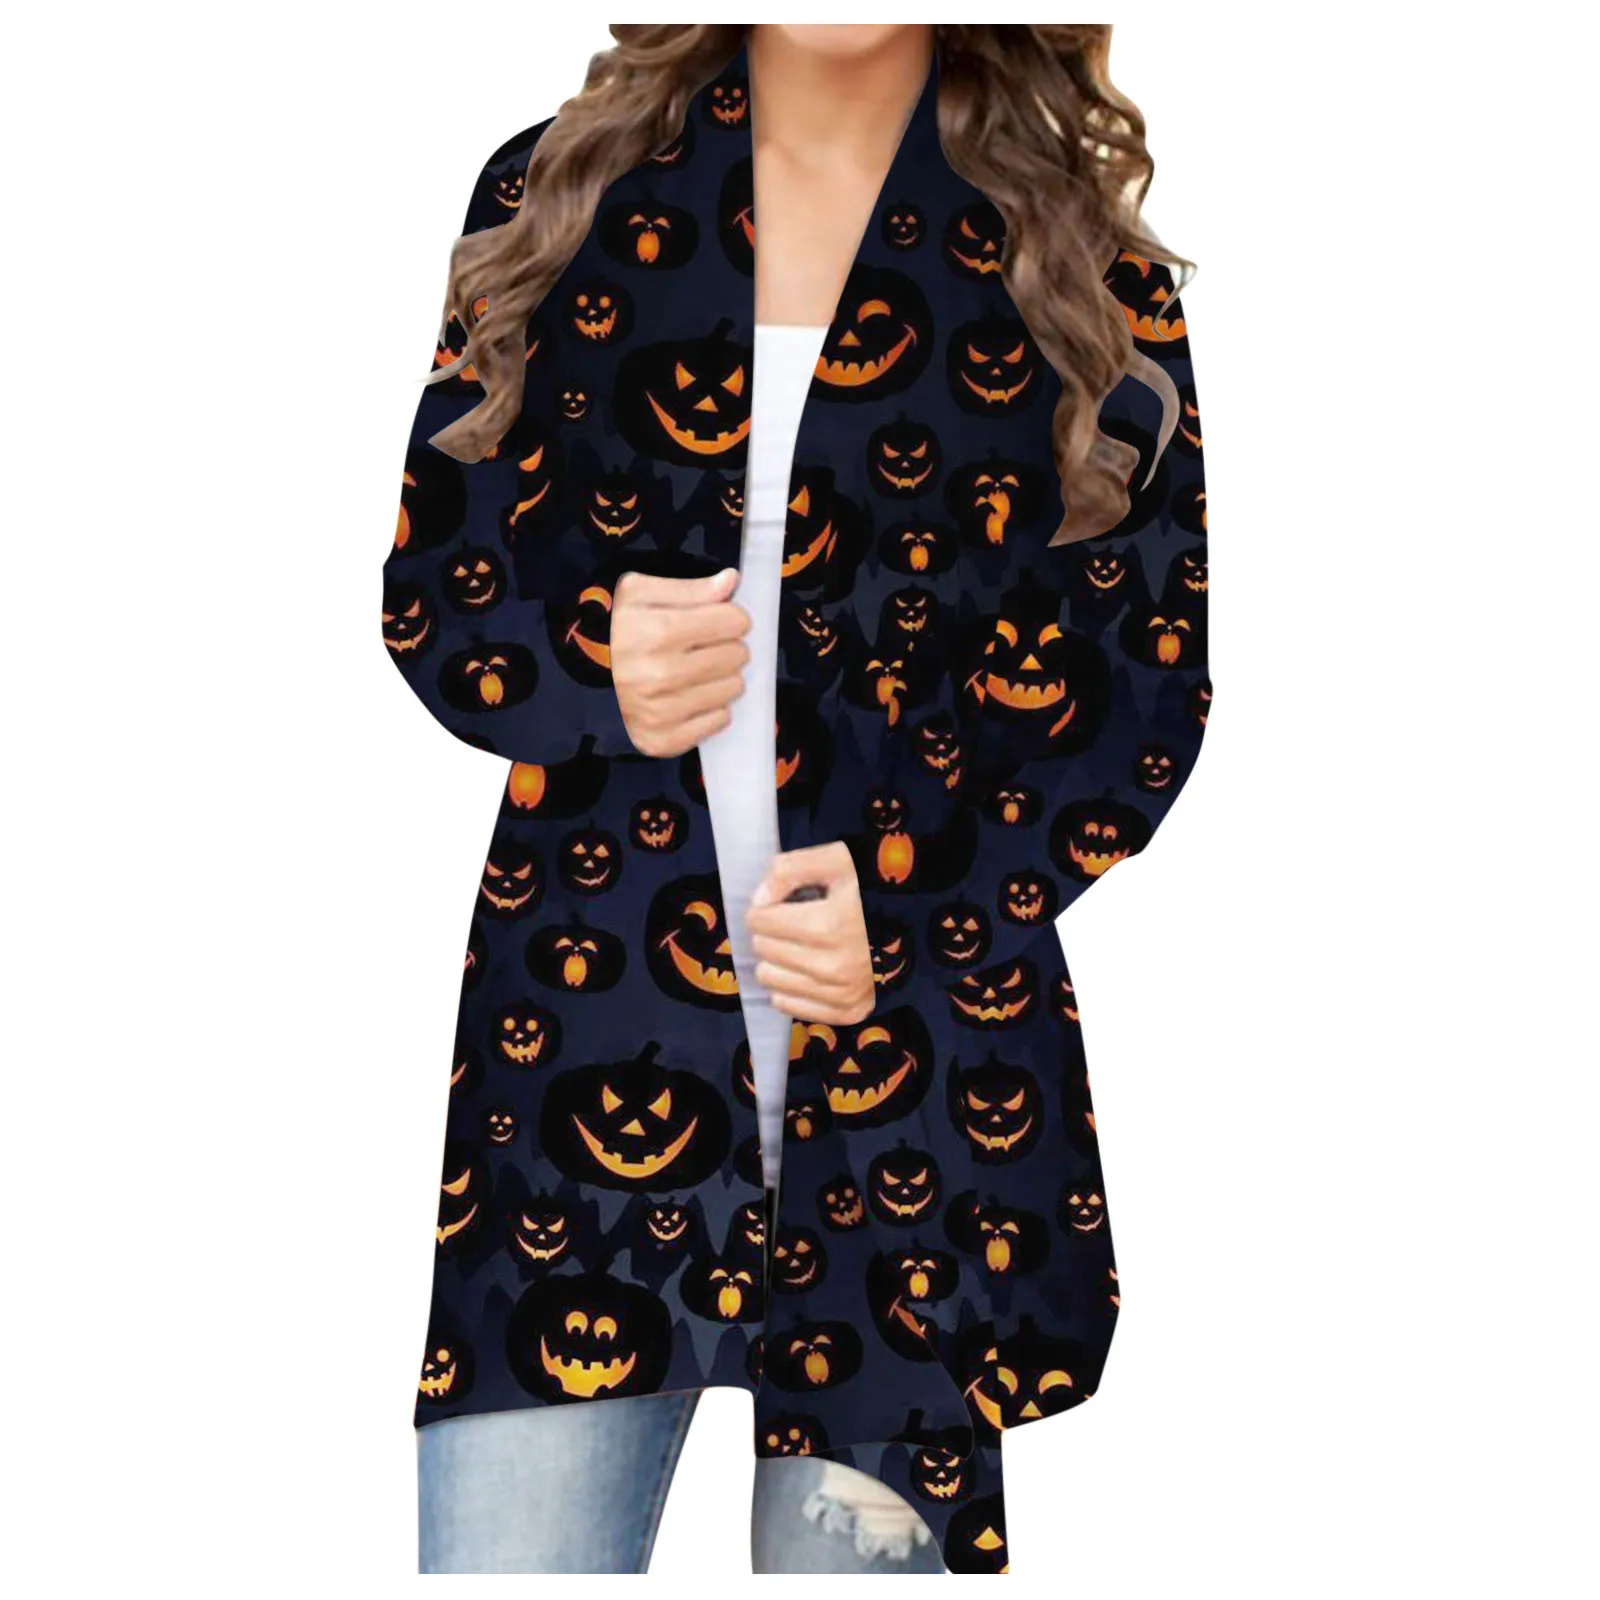 Pumpkin Print Sweater Women 2021 Fashion Winter Warm Long Sleeve Loose Comfortable Cardigan Black Gothic Girl Halloween costume